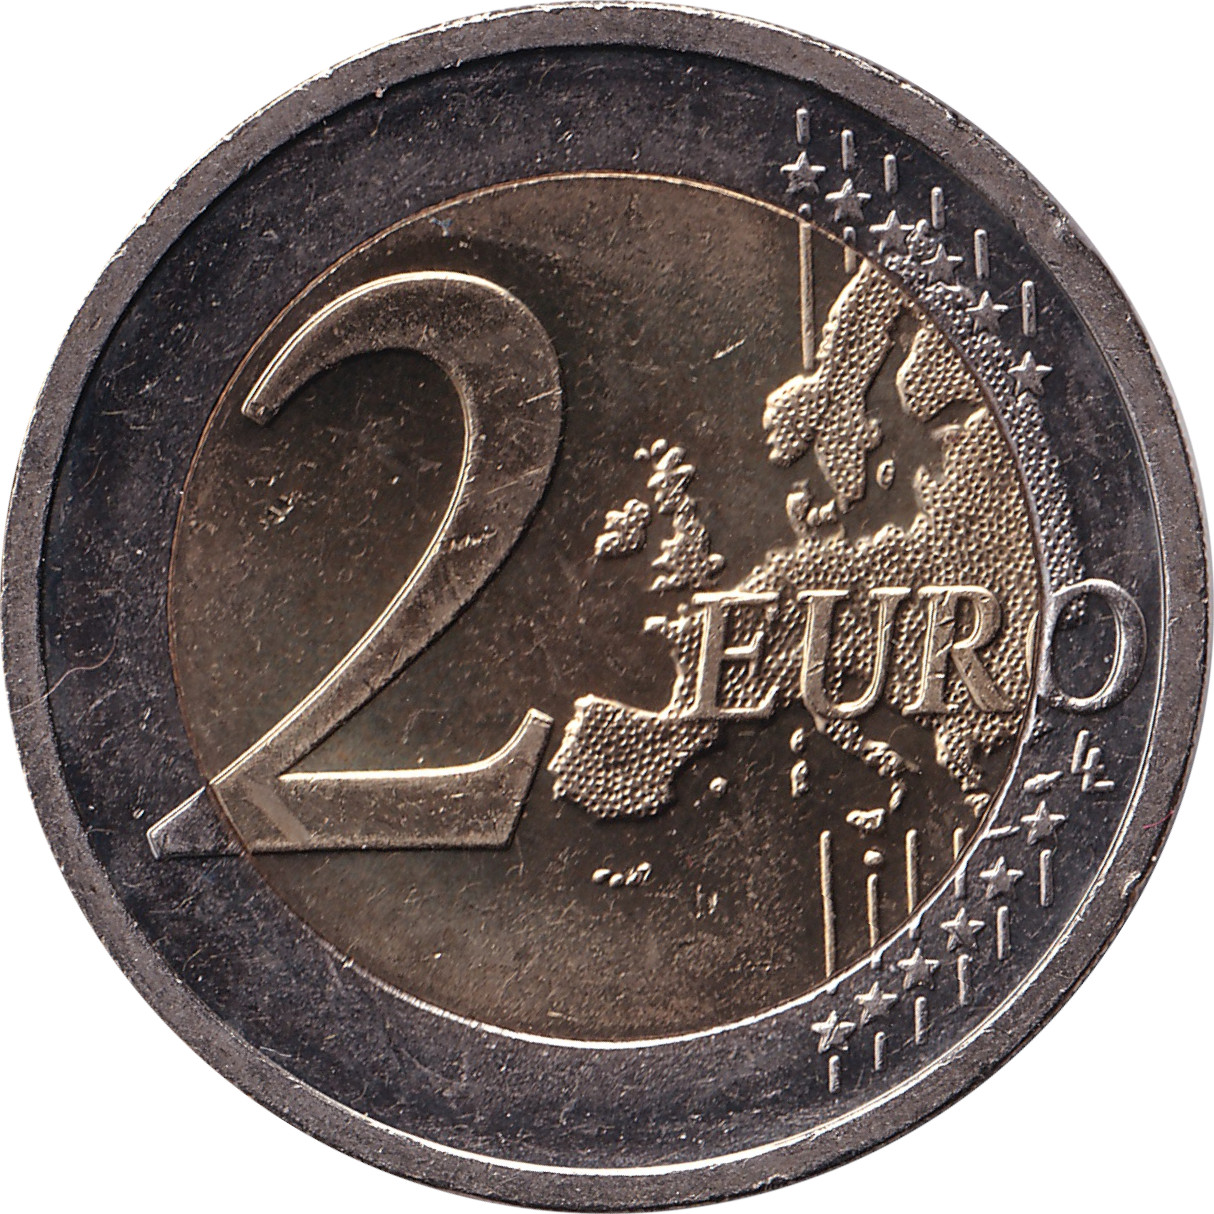 2 euro - Mise en circulation de l'Euro